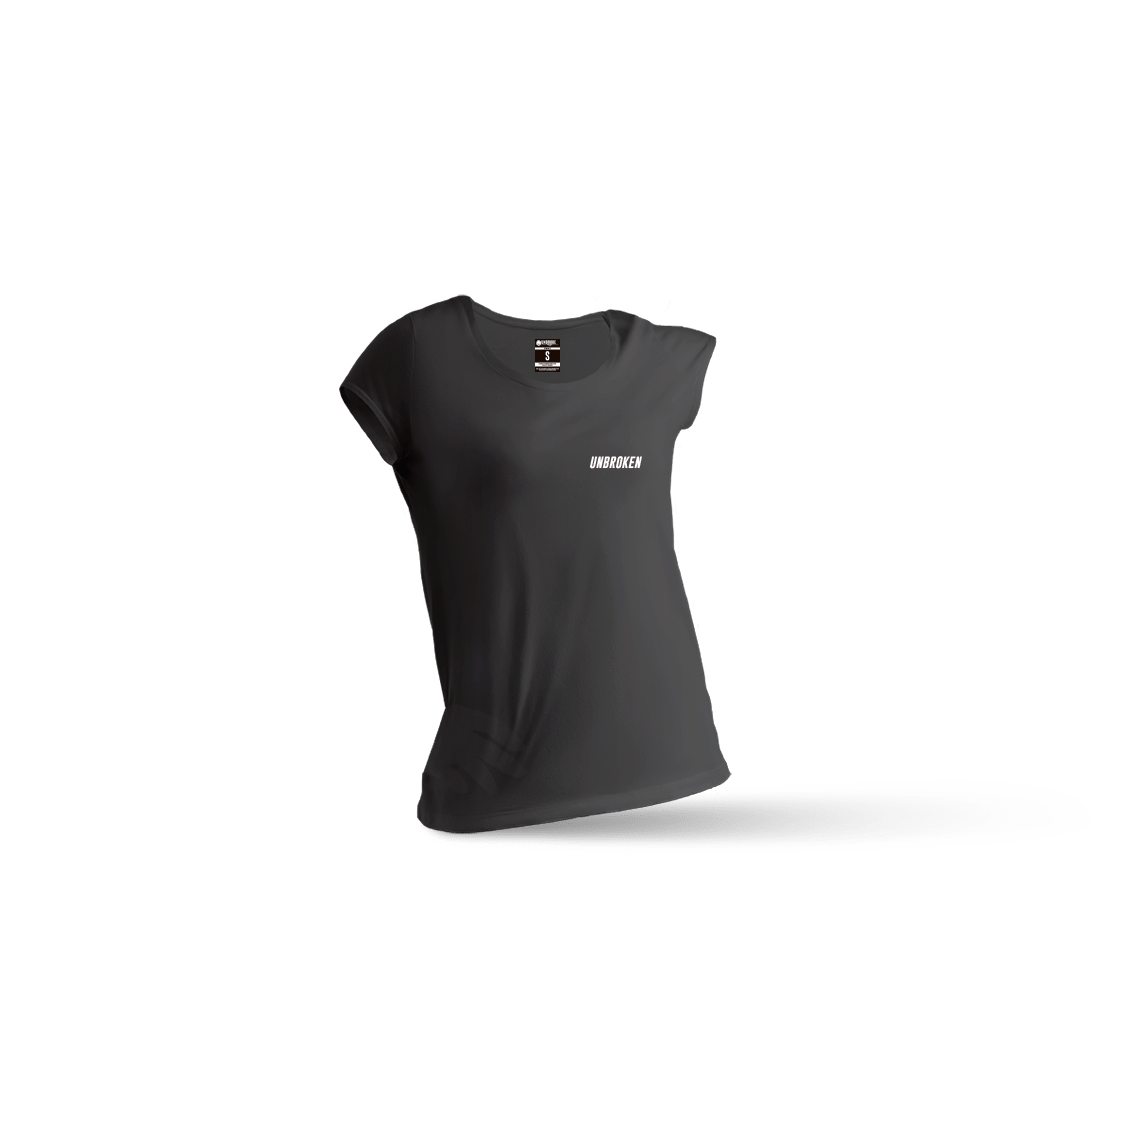 Camiseta Basic Black mujer - Unbroken Sports Wear 